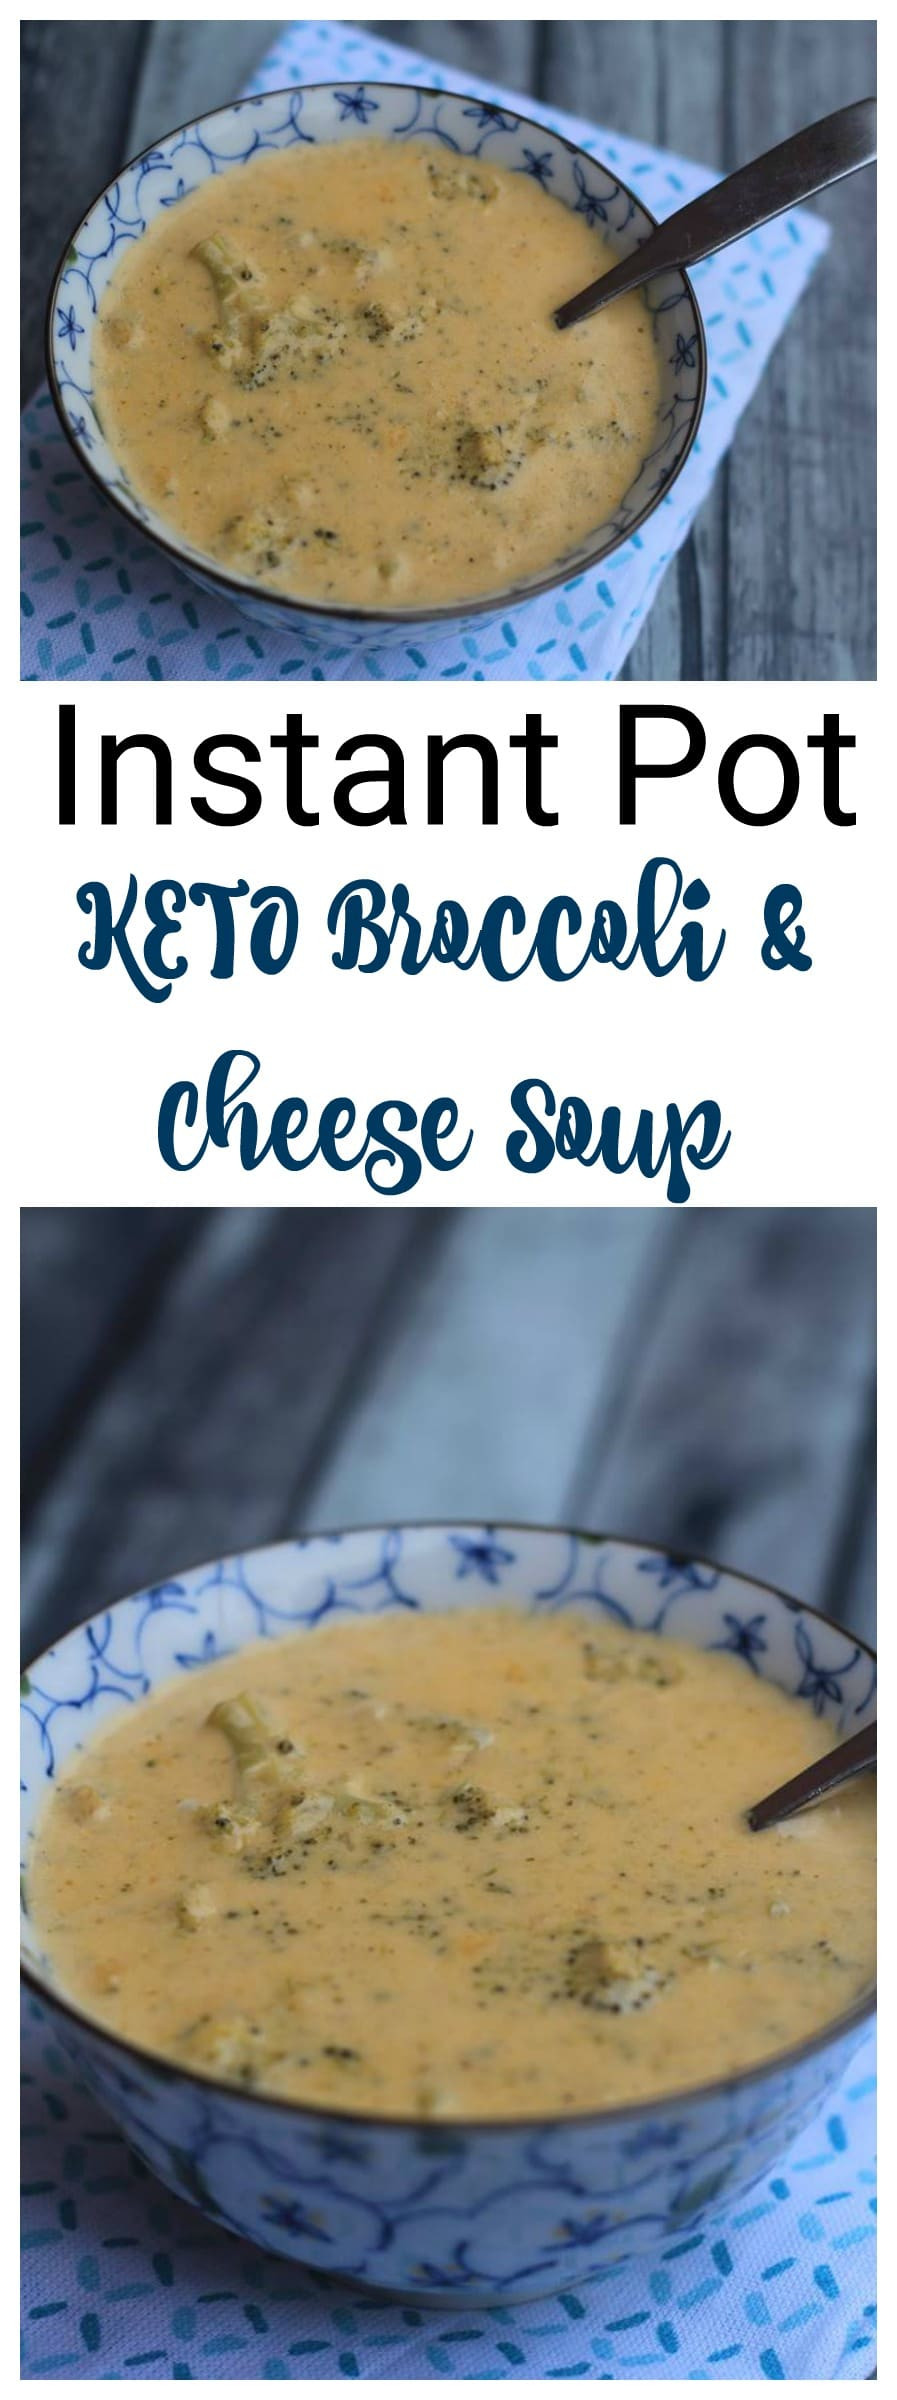 Instant Pot Keto Broccoli Cheddar Soup
 Instant Pot Broccoli & Cheese Soup Recipe Keto Low Carb